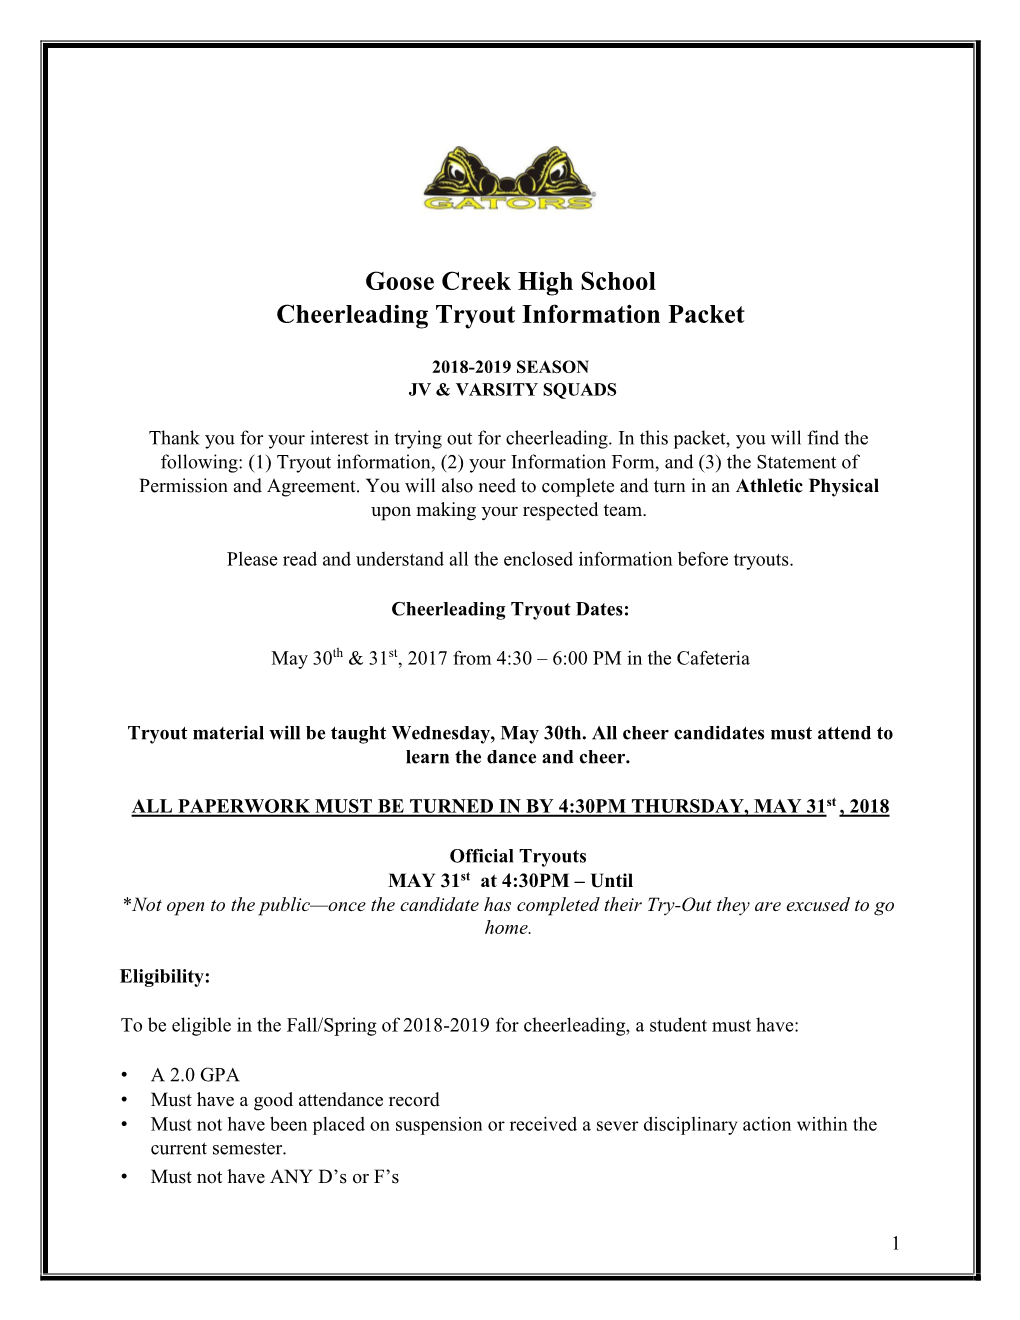 Goose Creek High School Cheerleading Tryout Information Packet